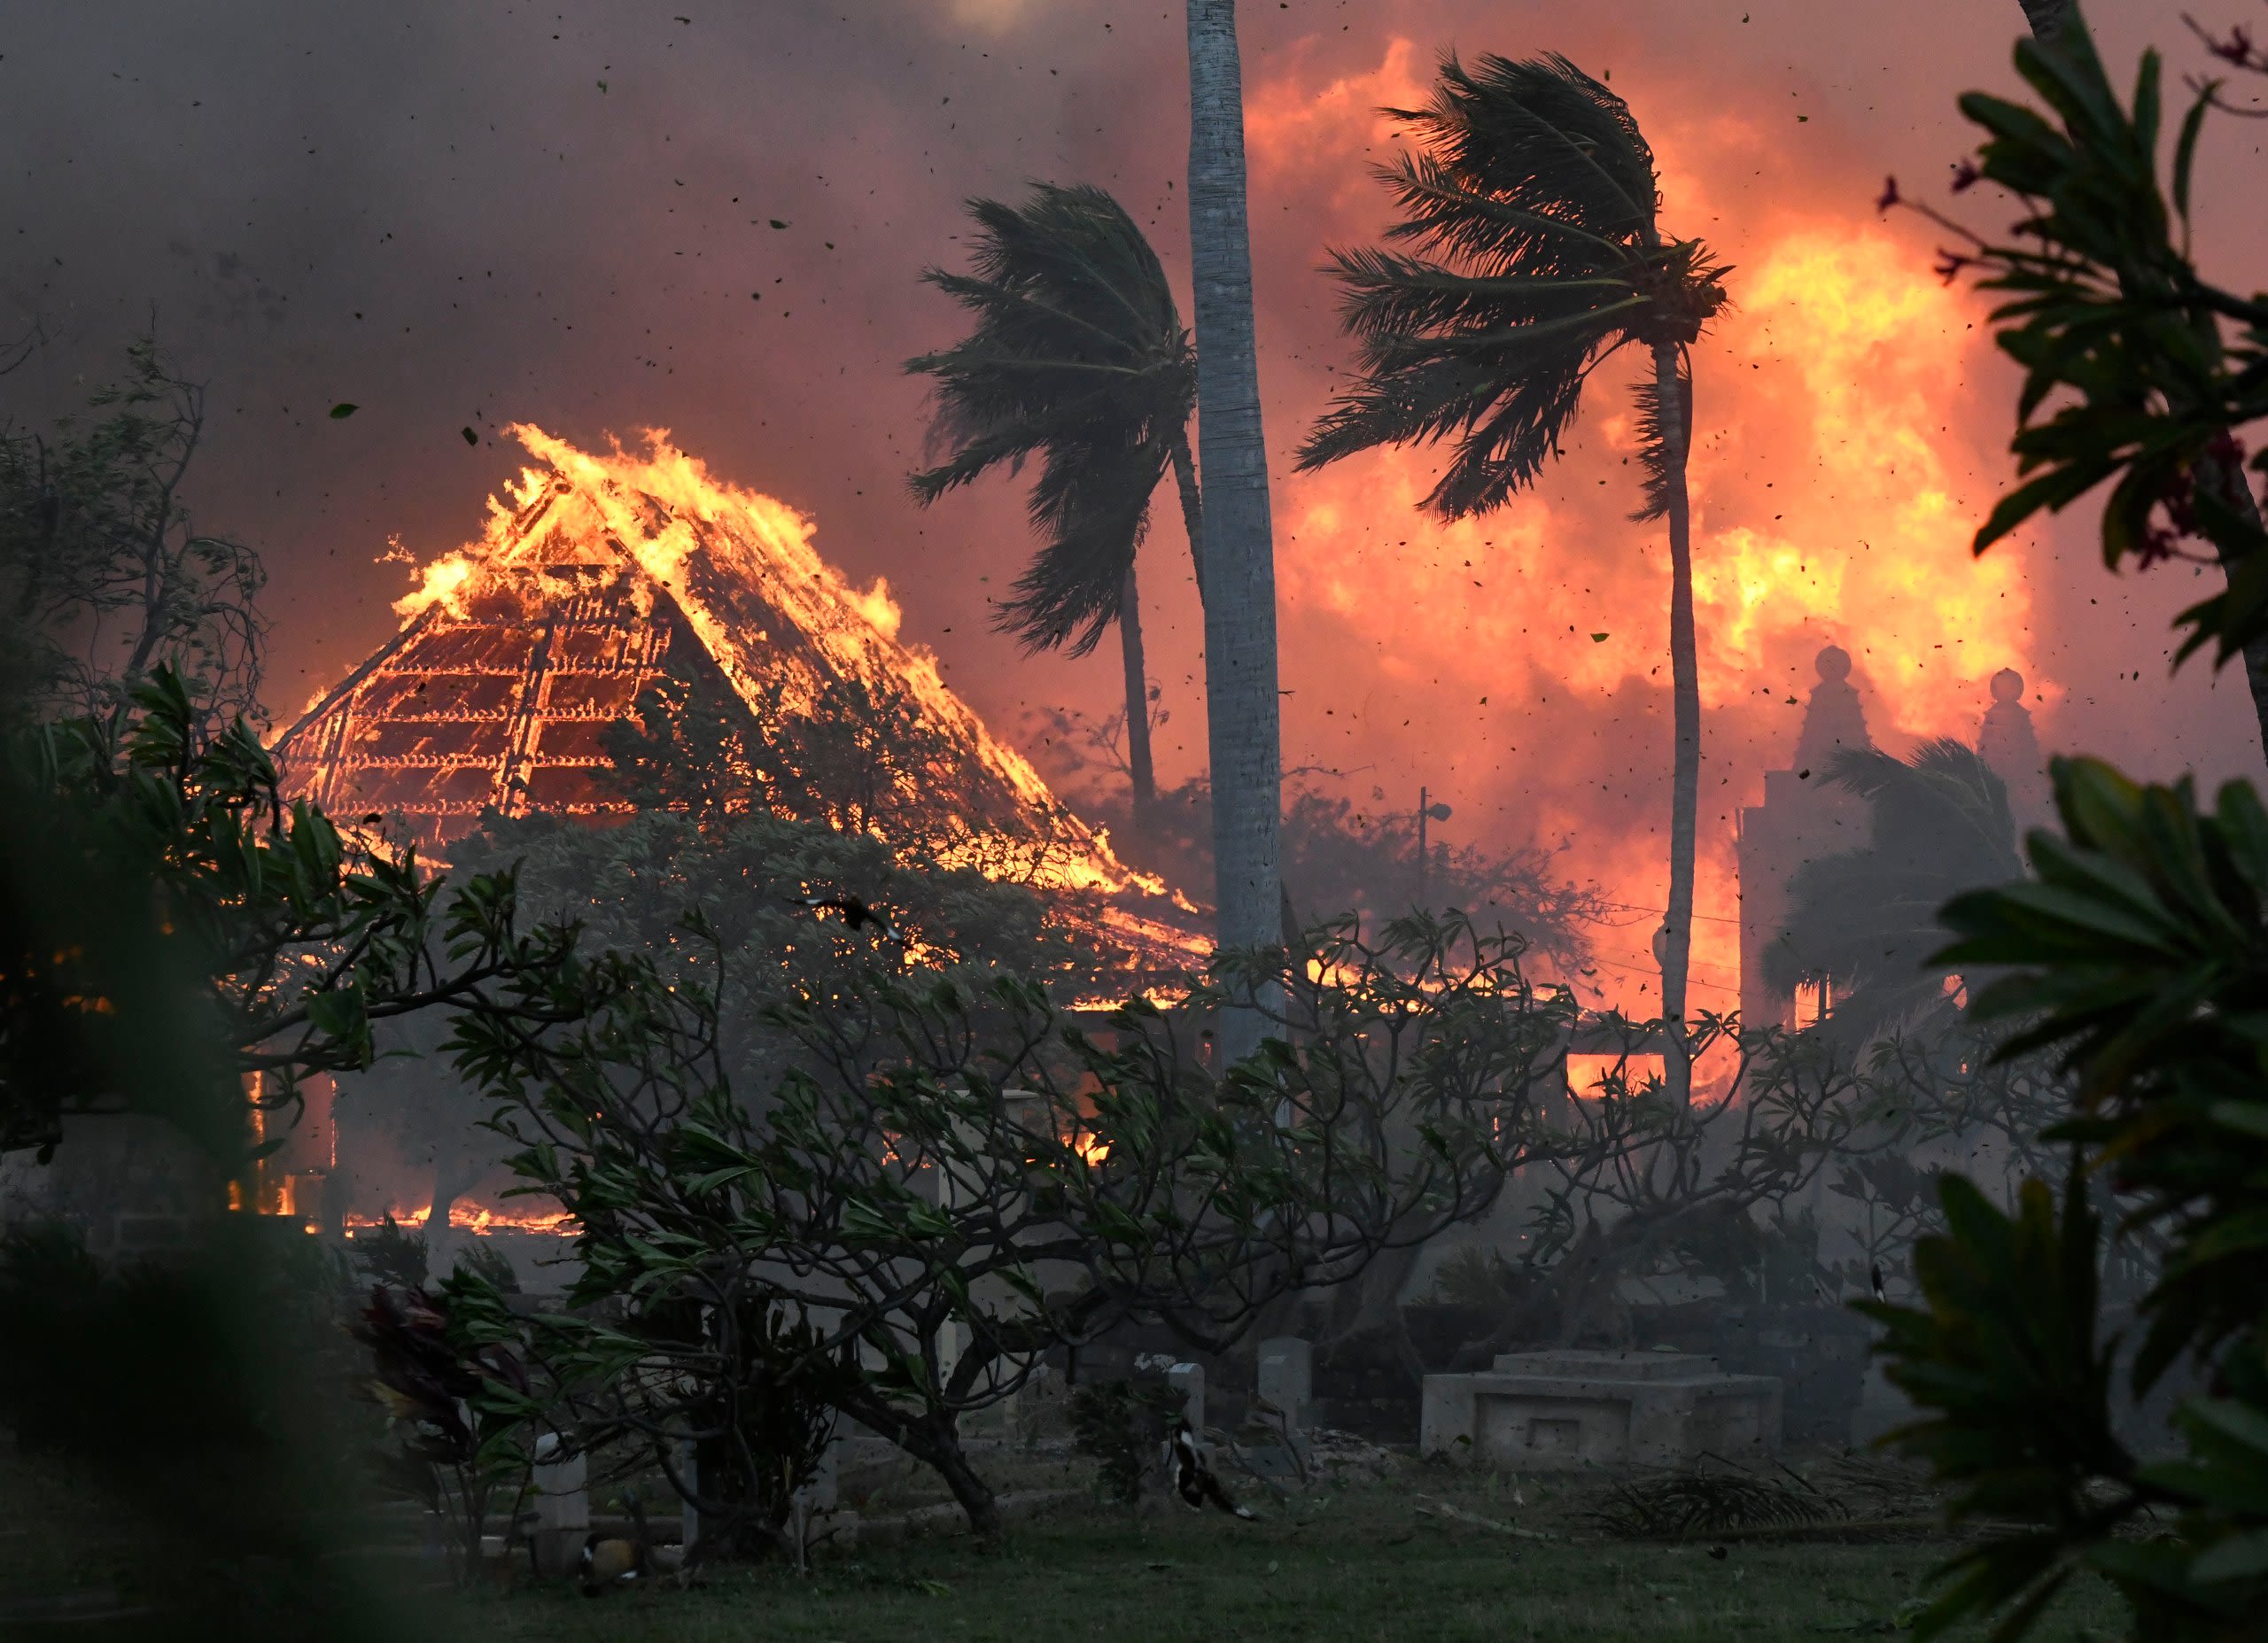 Proposed $4 billion Maui wildfire settlement hits mainland snag